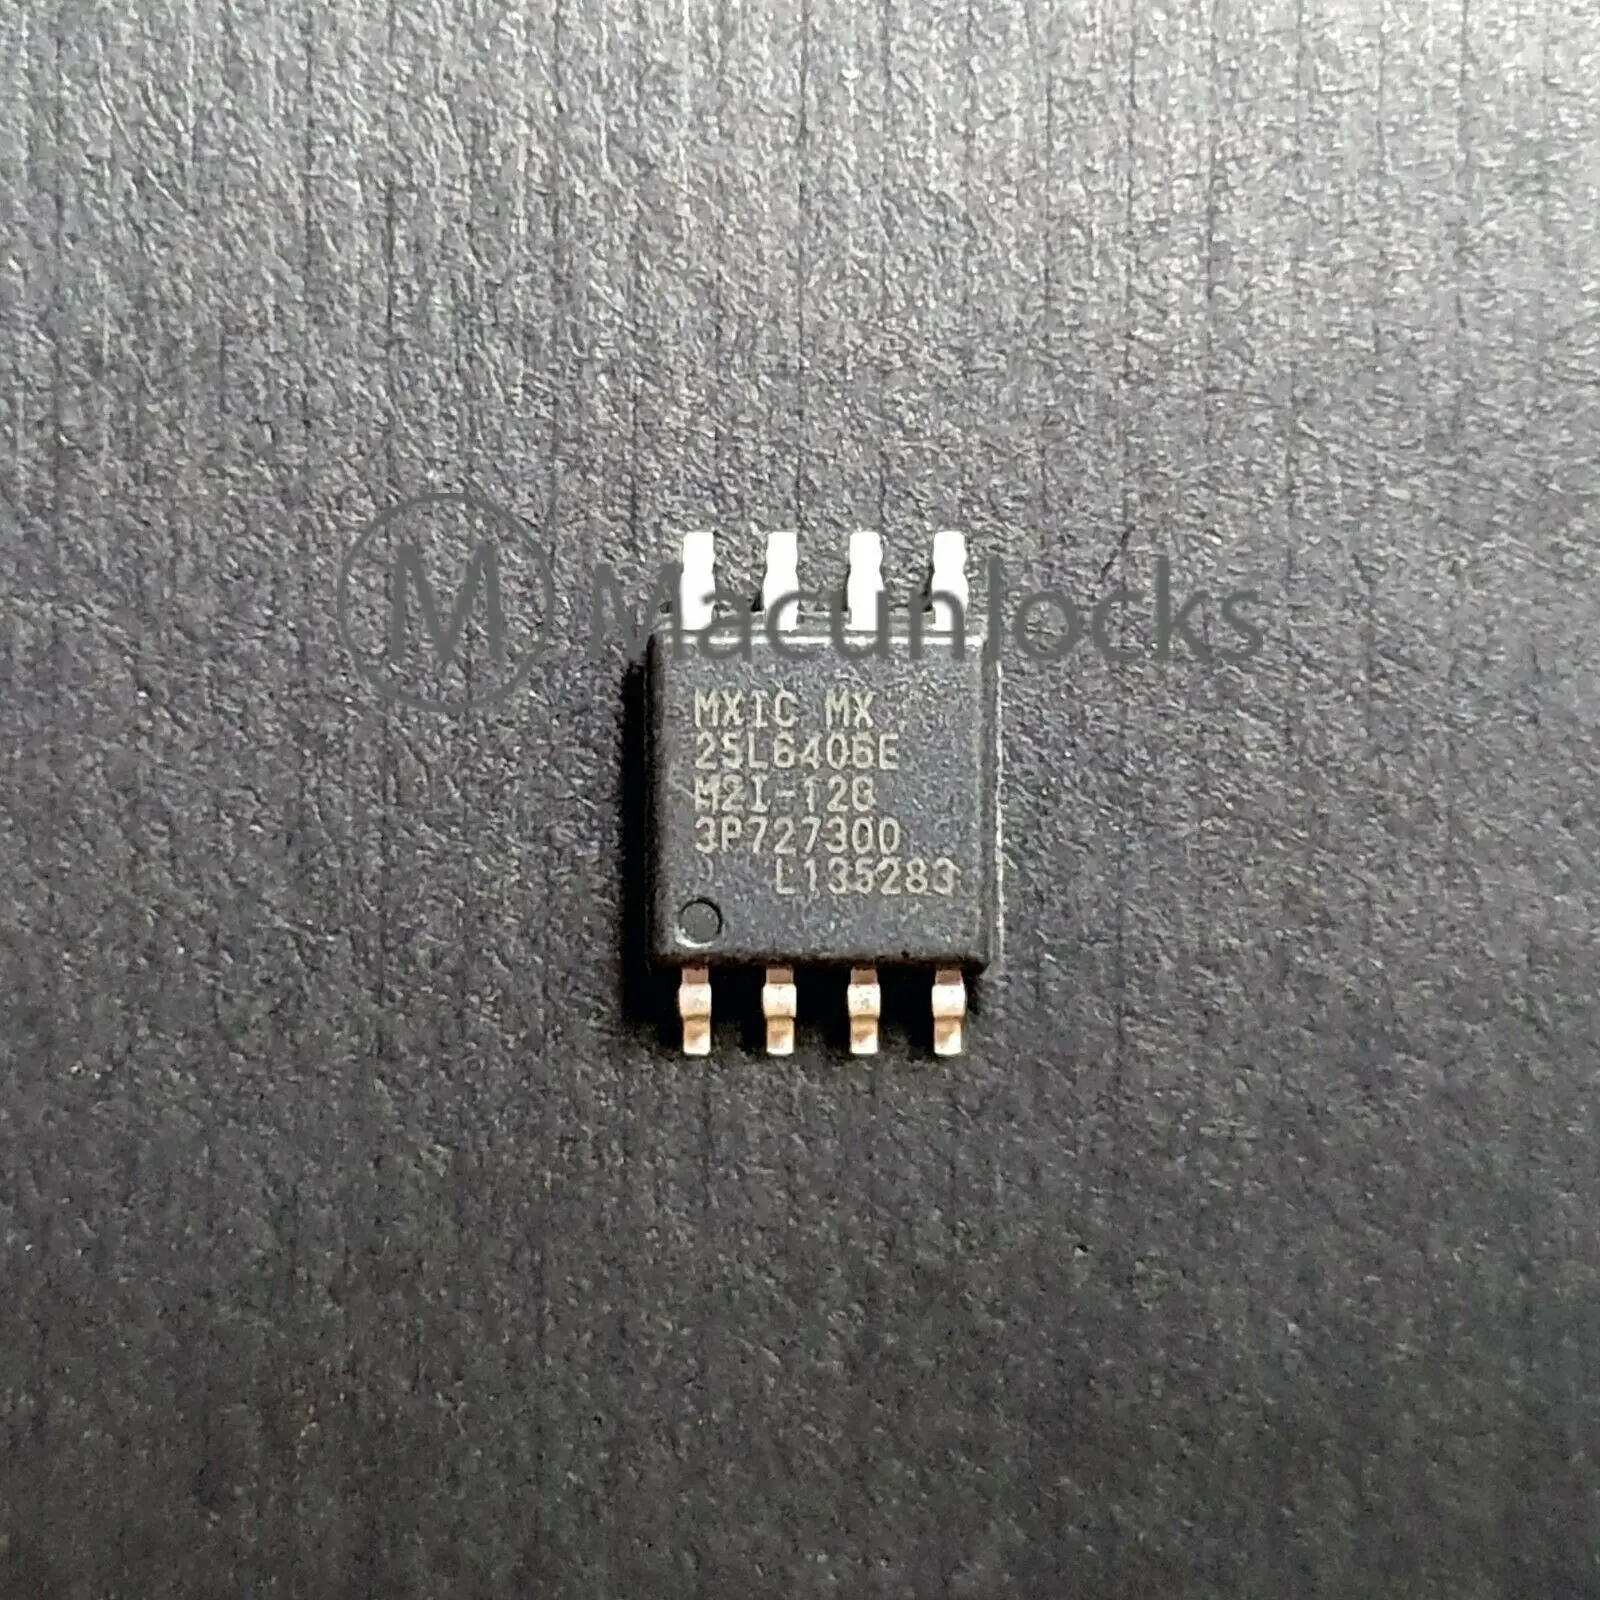 BIOS EFI Firmware Chip for Apple A1419 iMac 27" EMC 2546